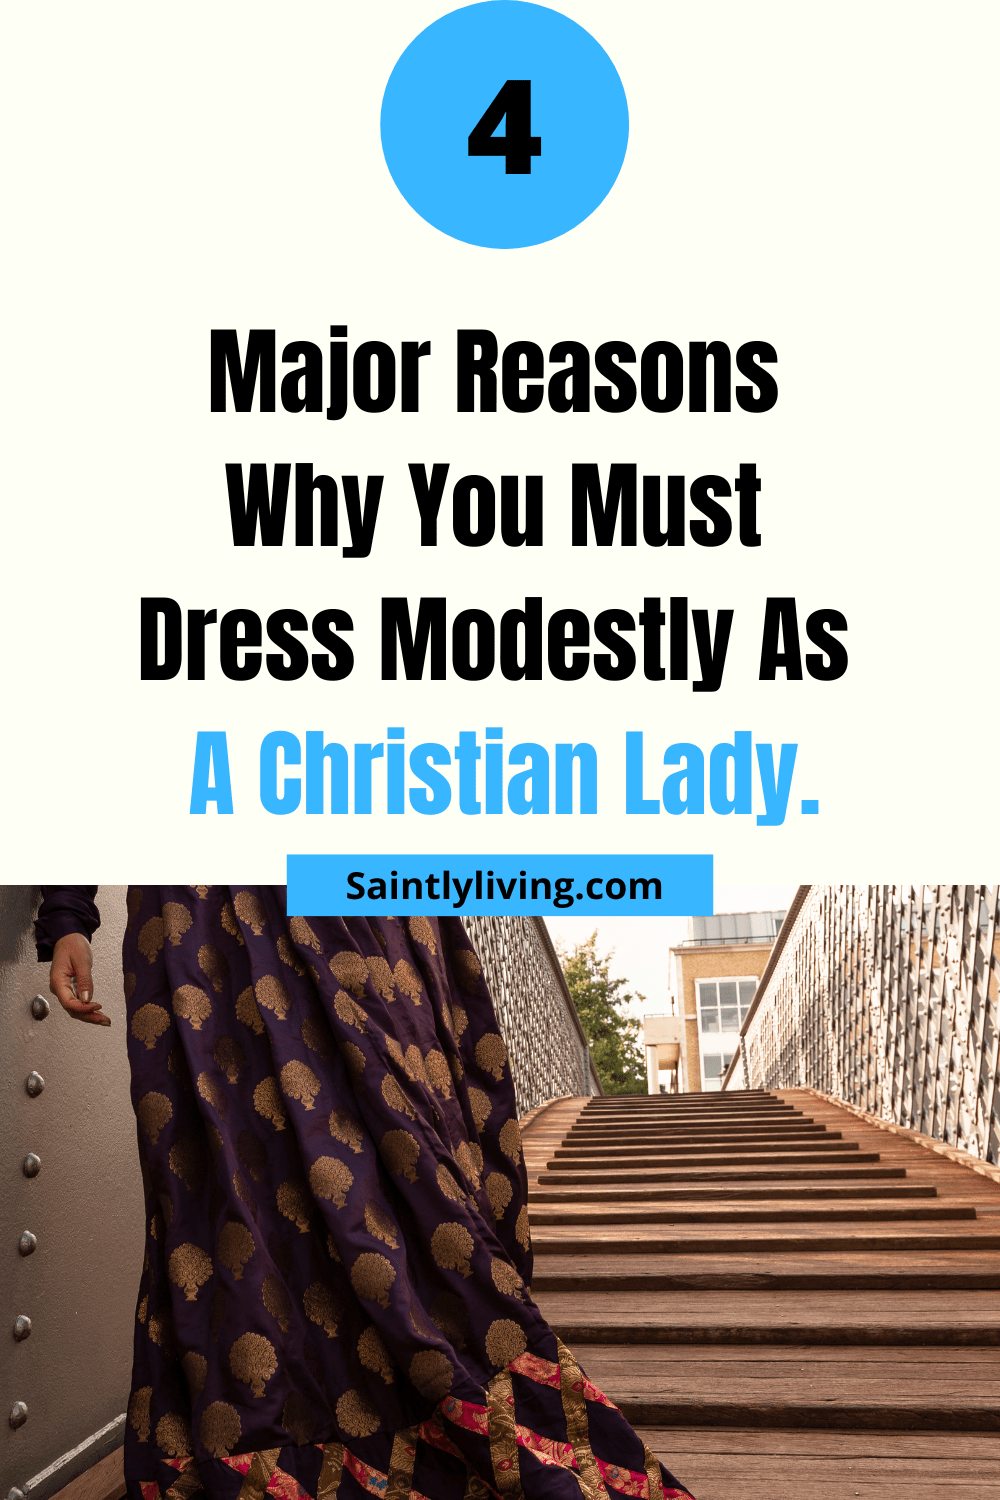 modest-dressing-as-a-Christian-woman